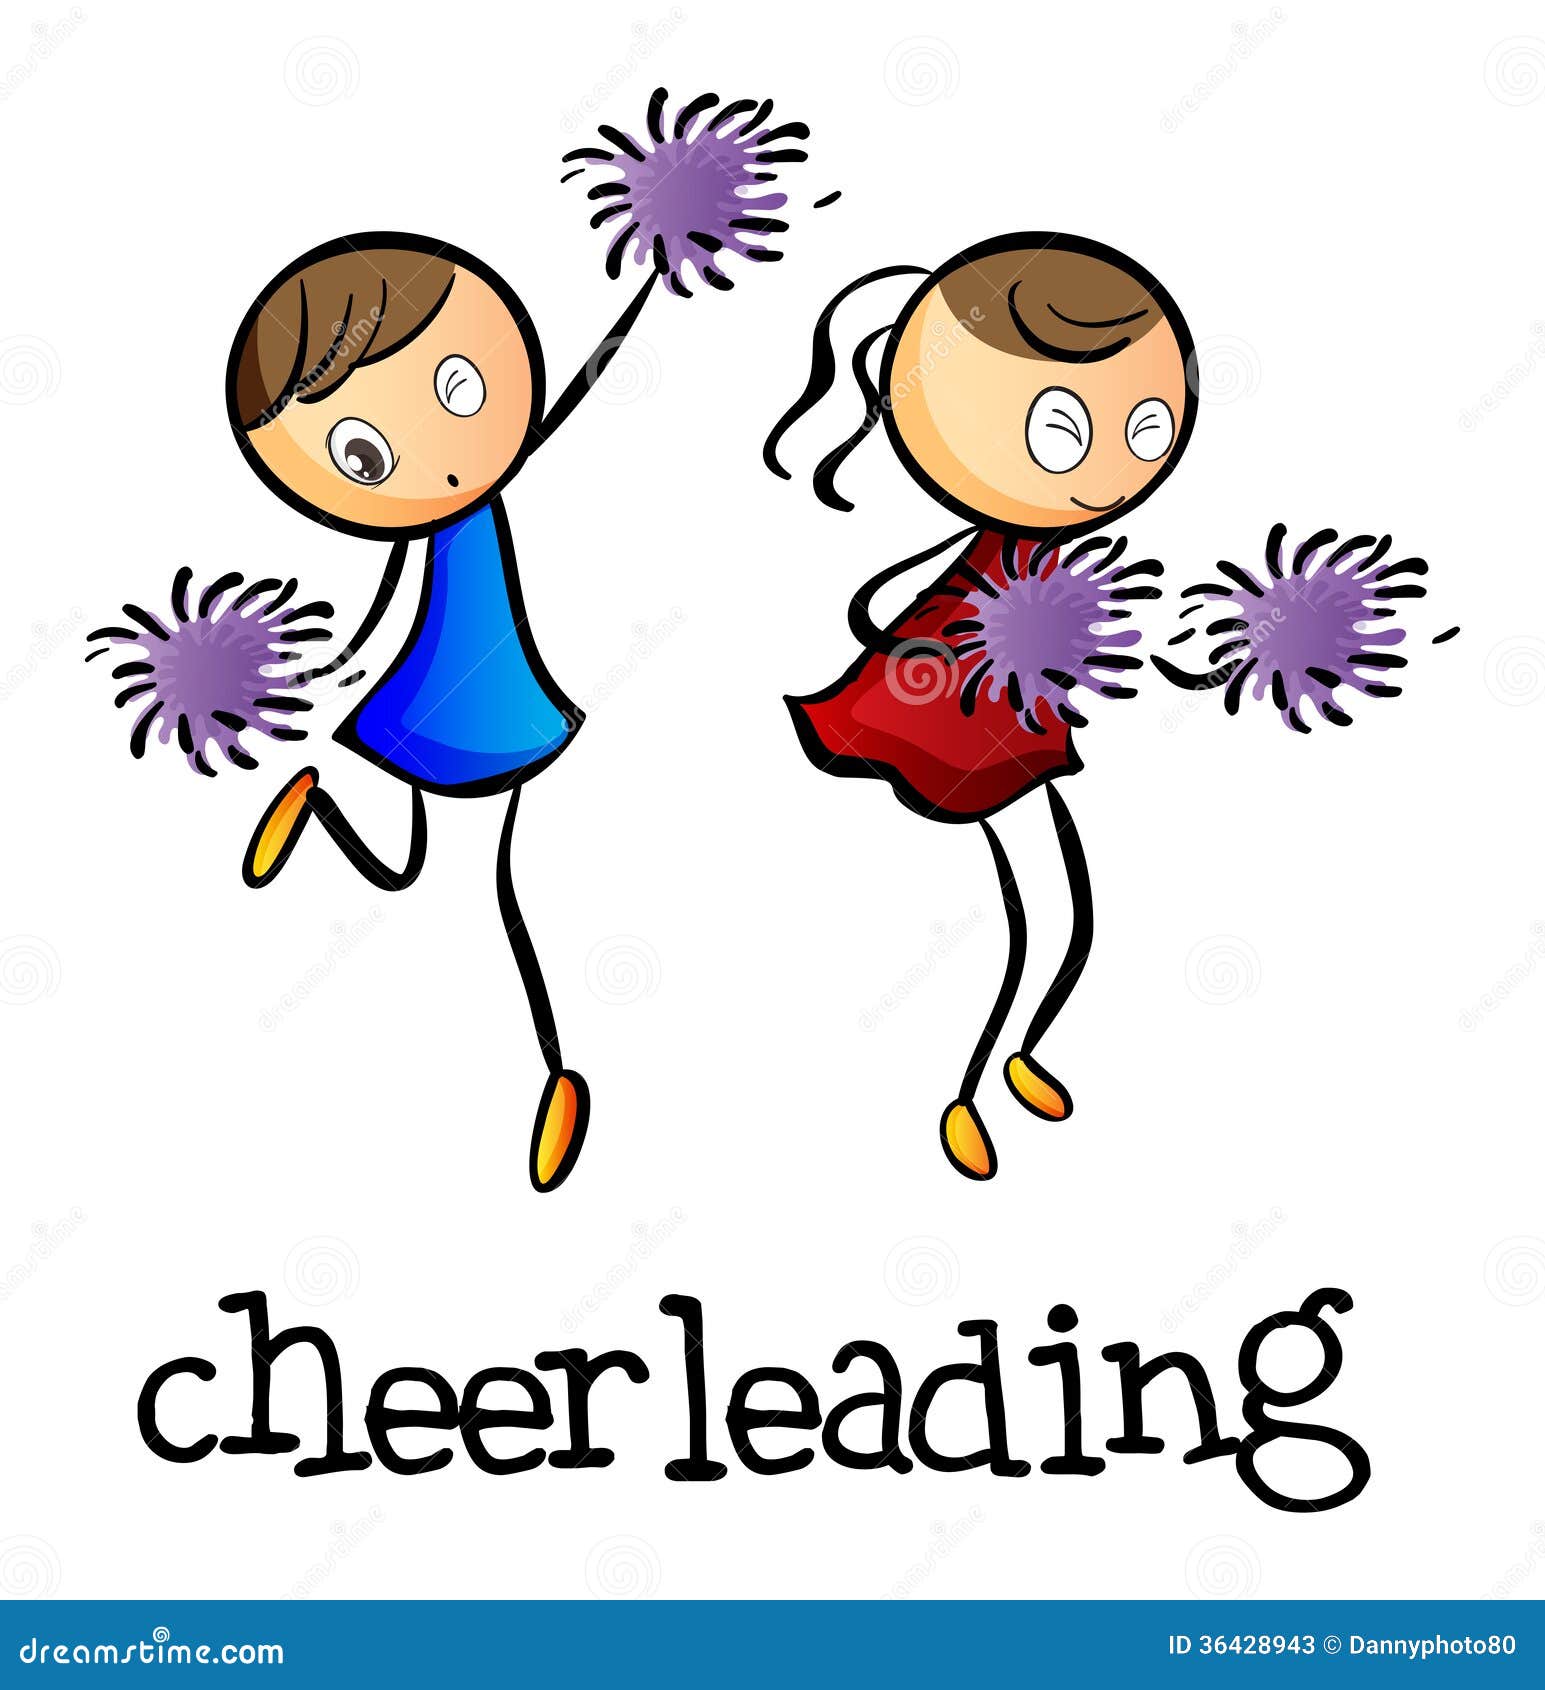 free animated clipart of cheerleaders - photo #9